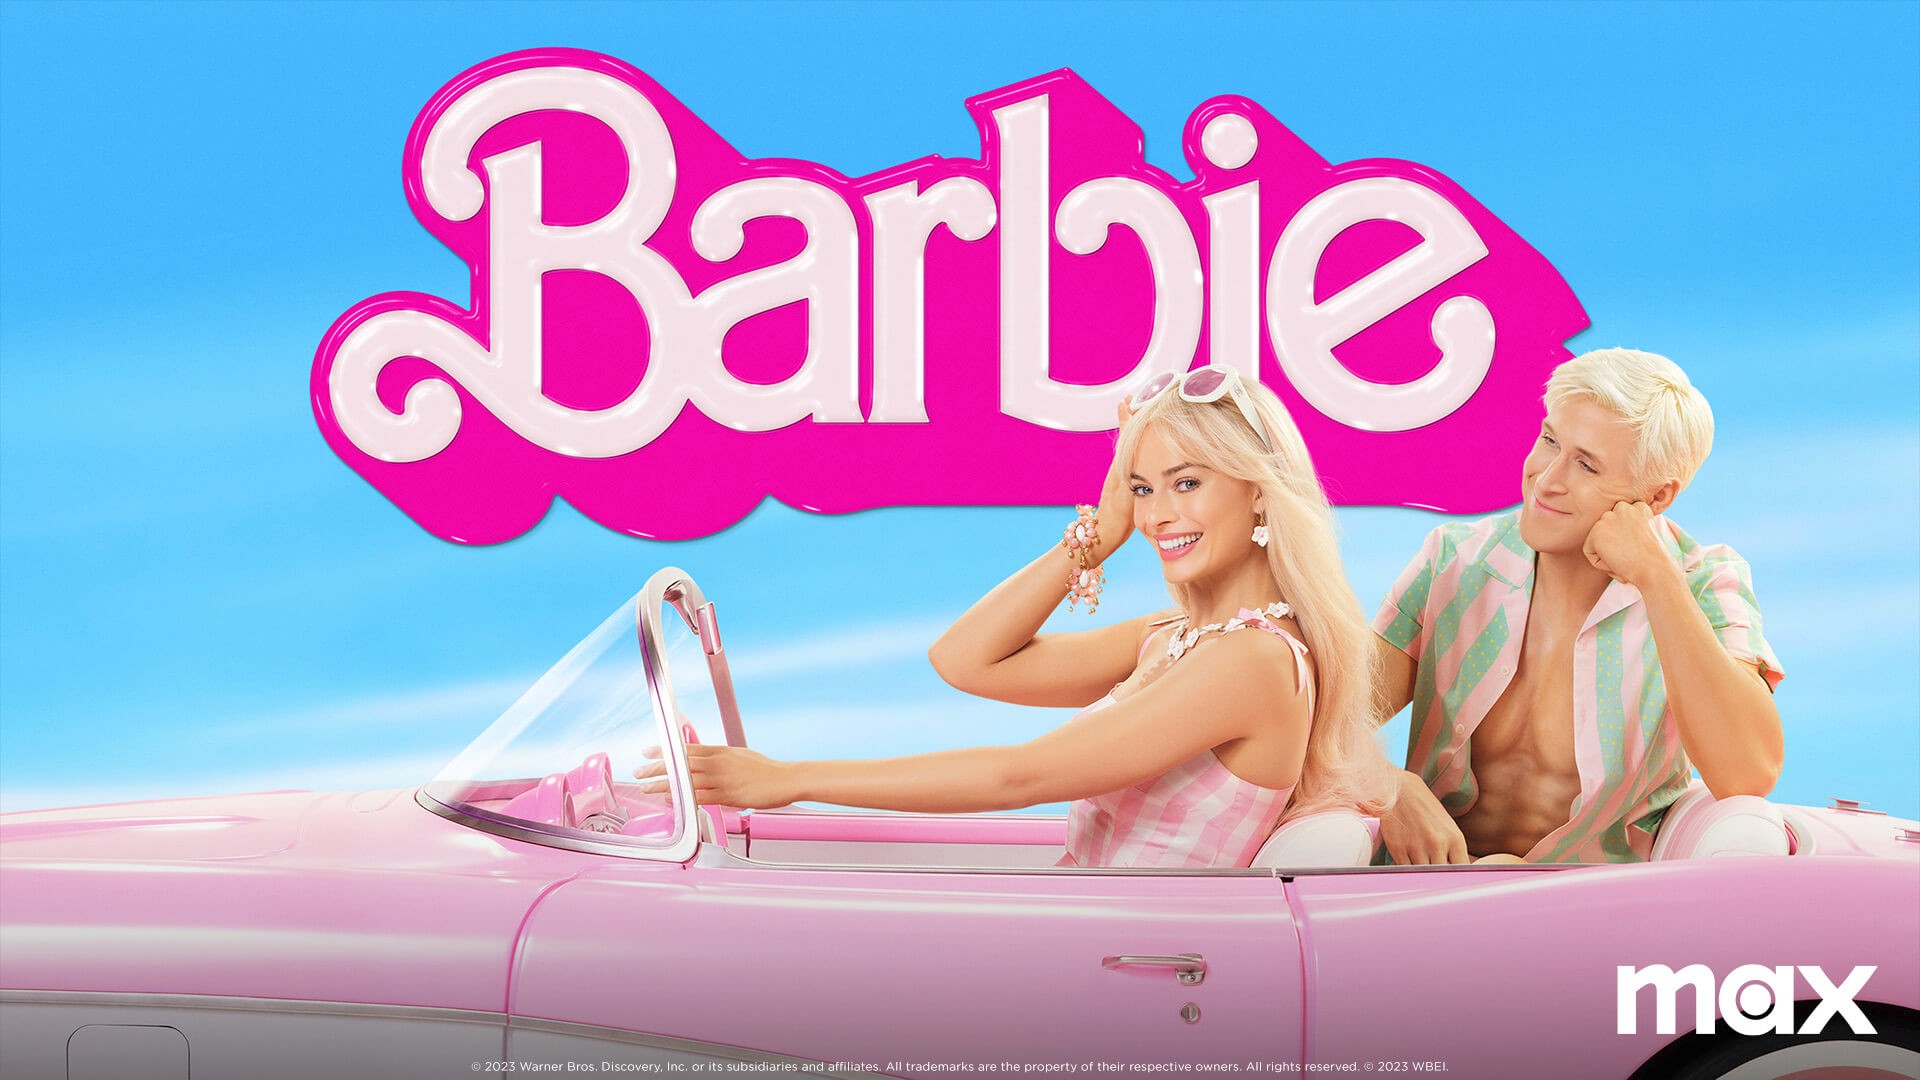 Stream Barbie on Max